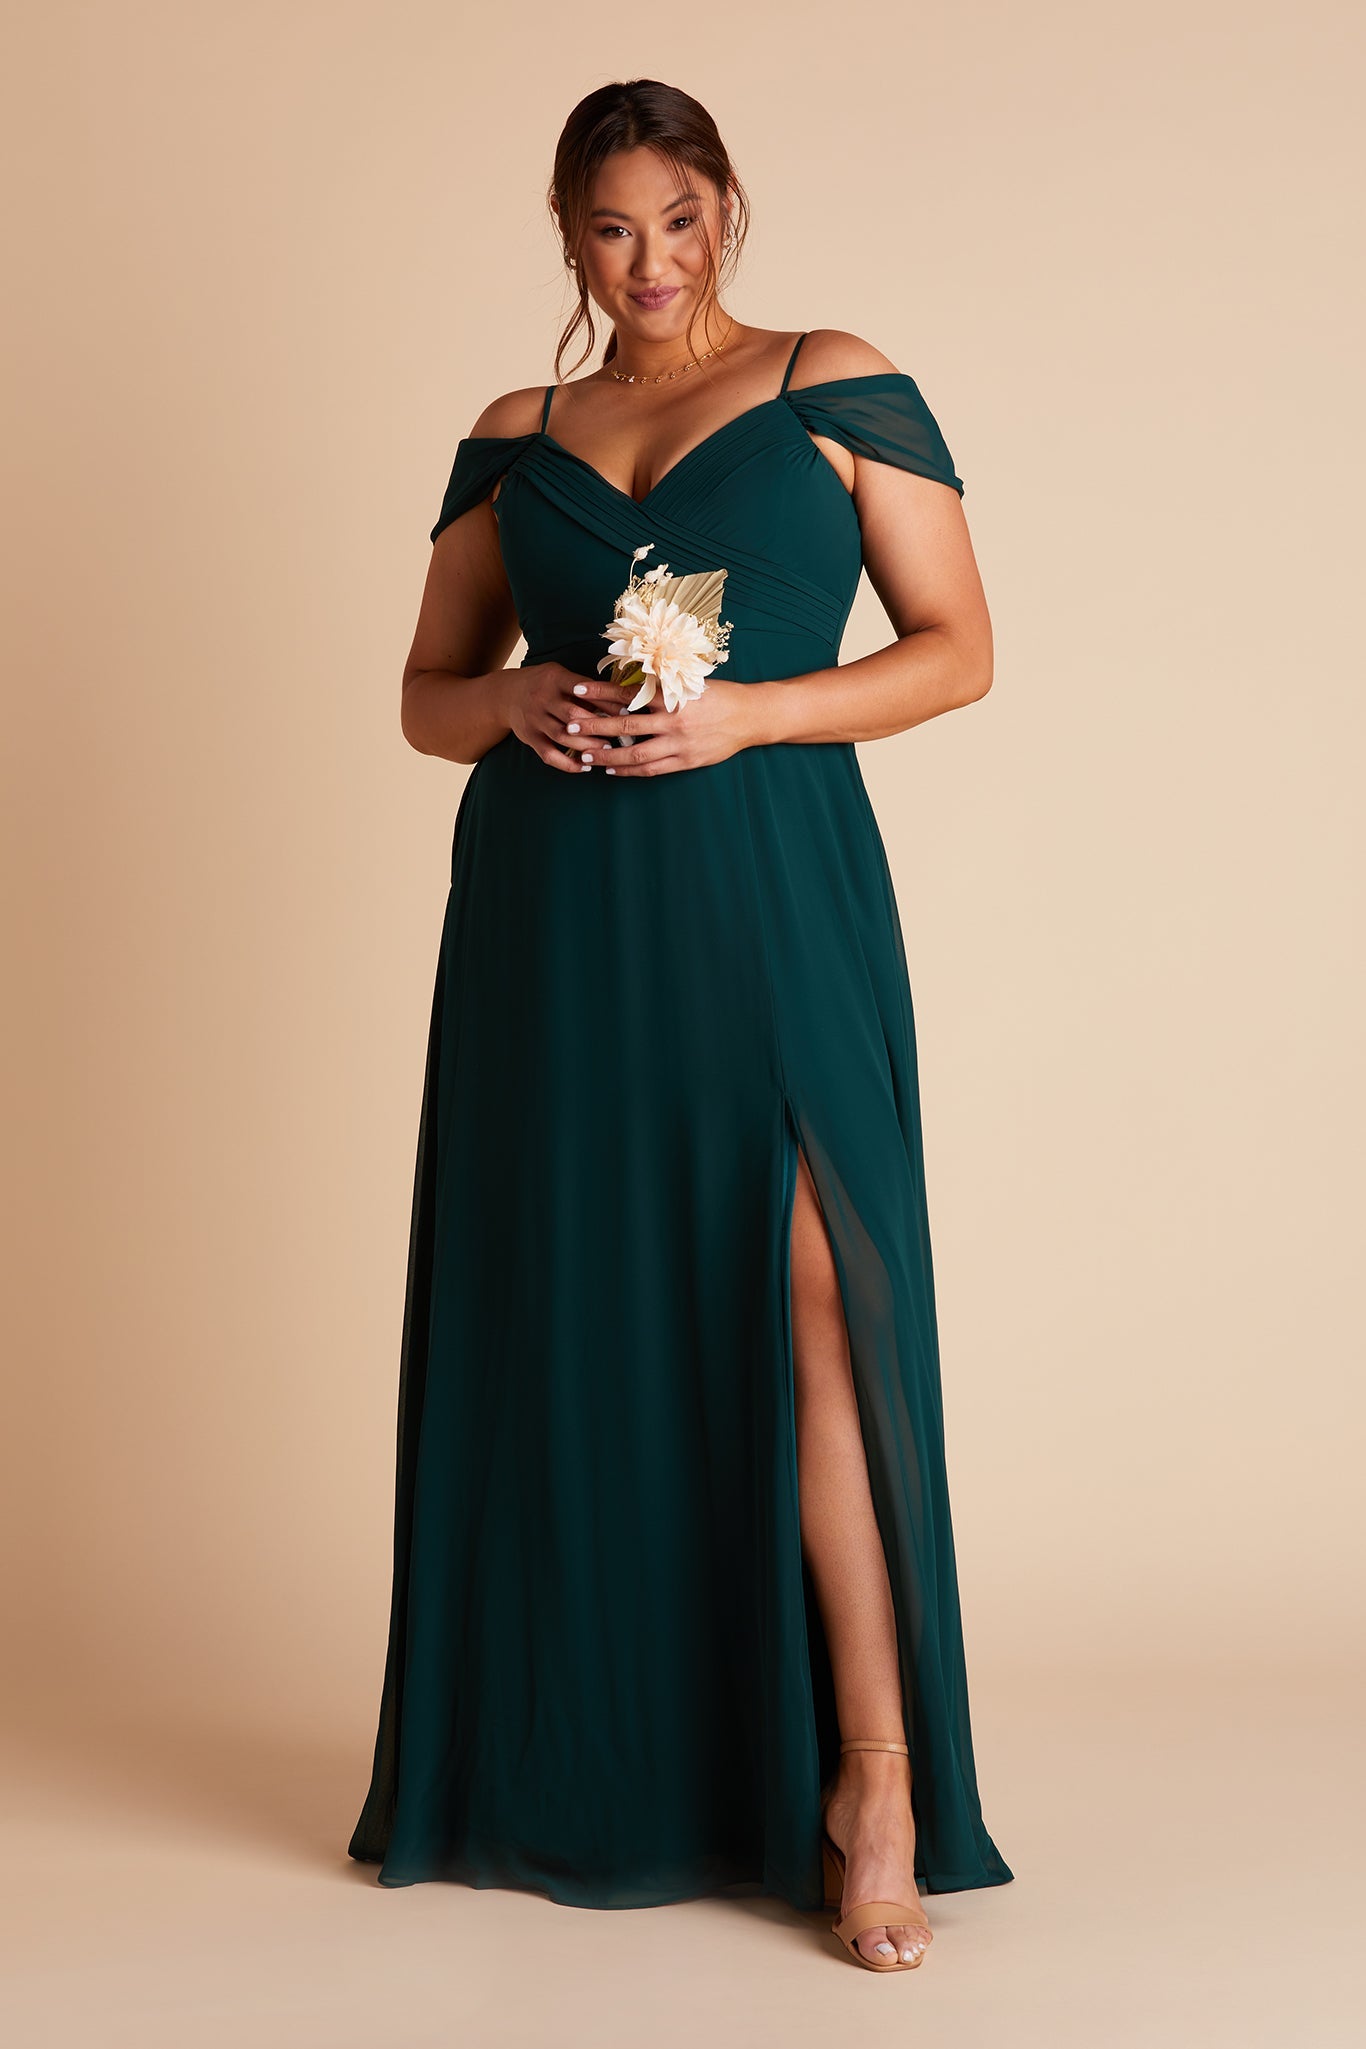 Spence Convertible Chiffon Bridesmaid Dress in Emerald | Birdy Grey